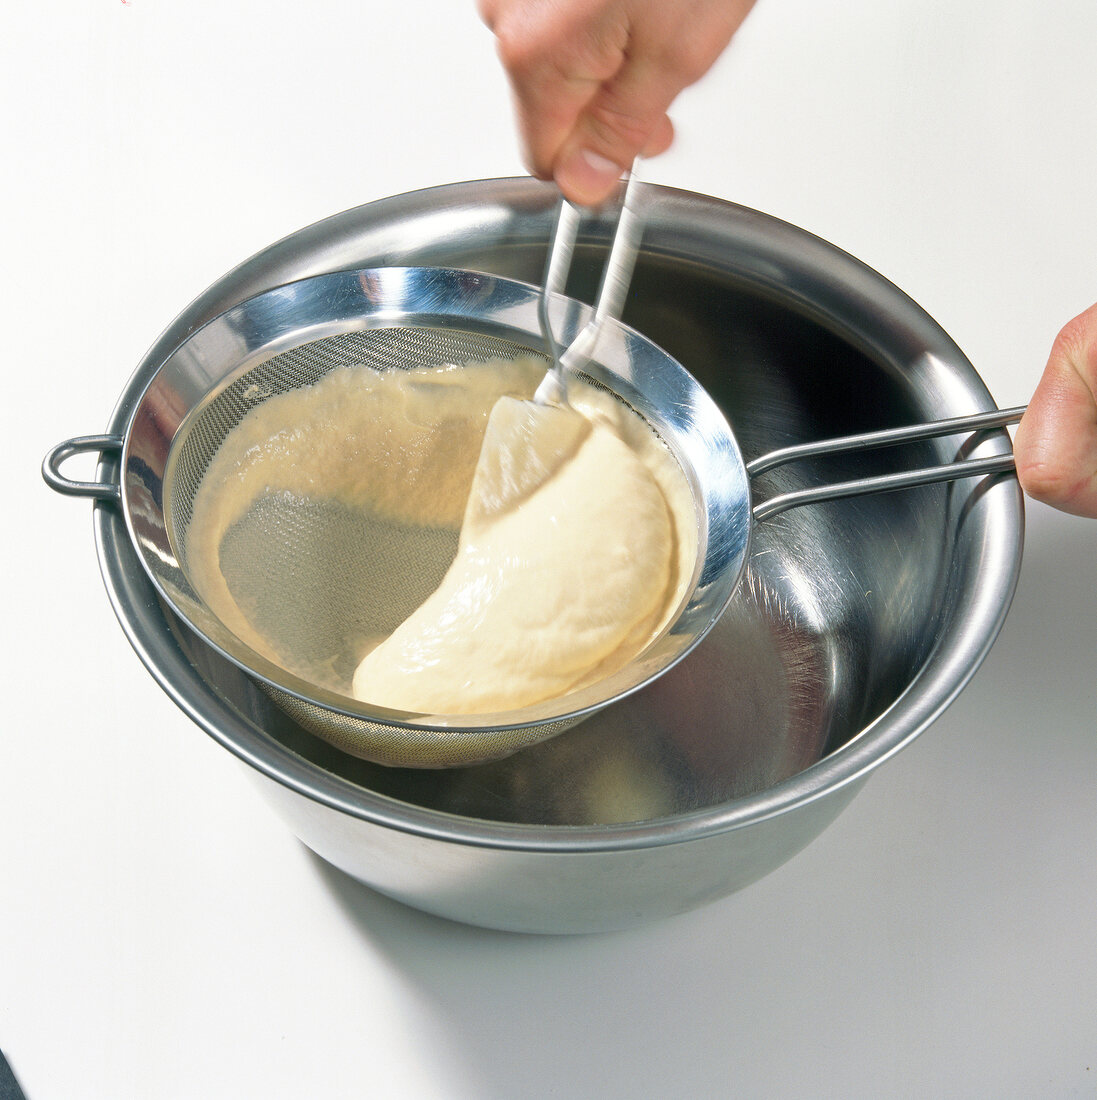 Passing dough through sieve, step 2